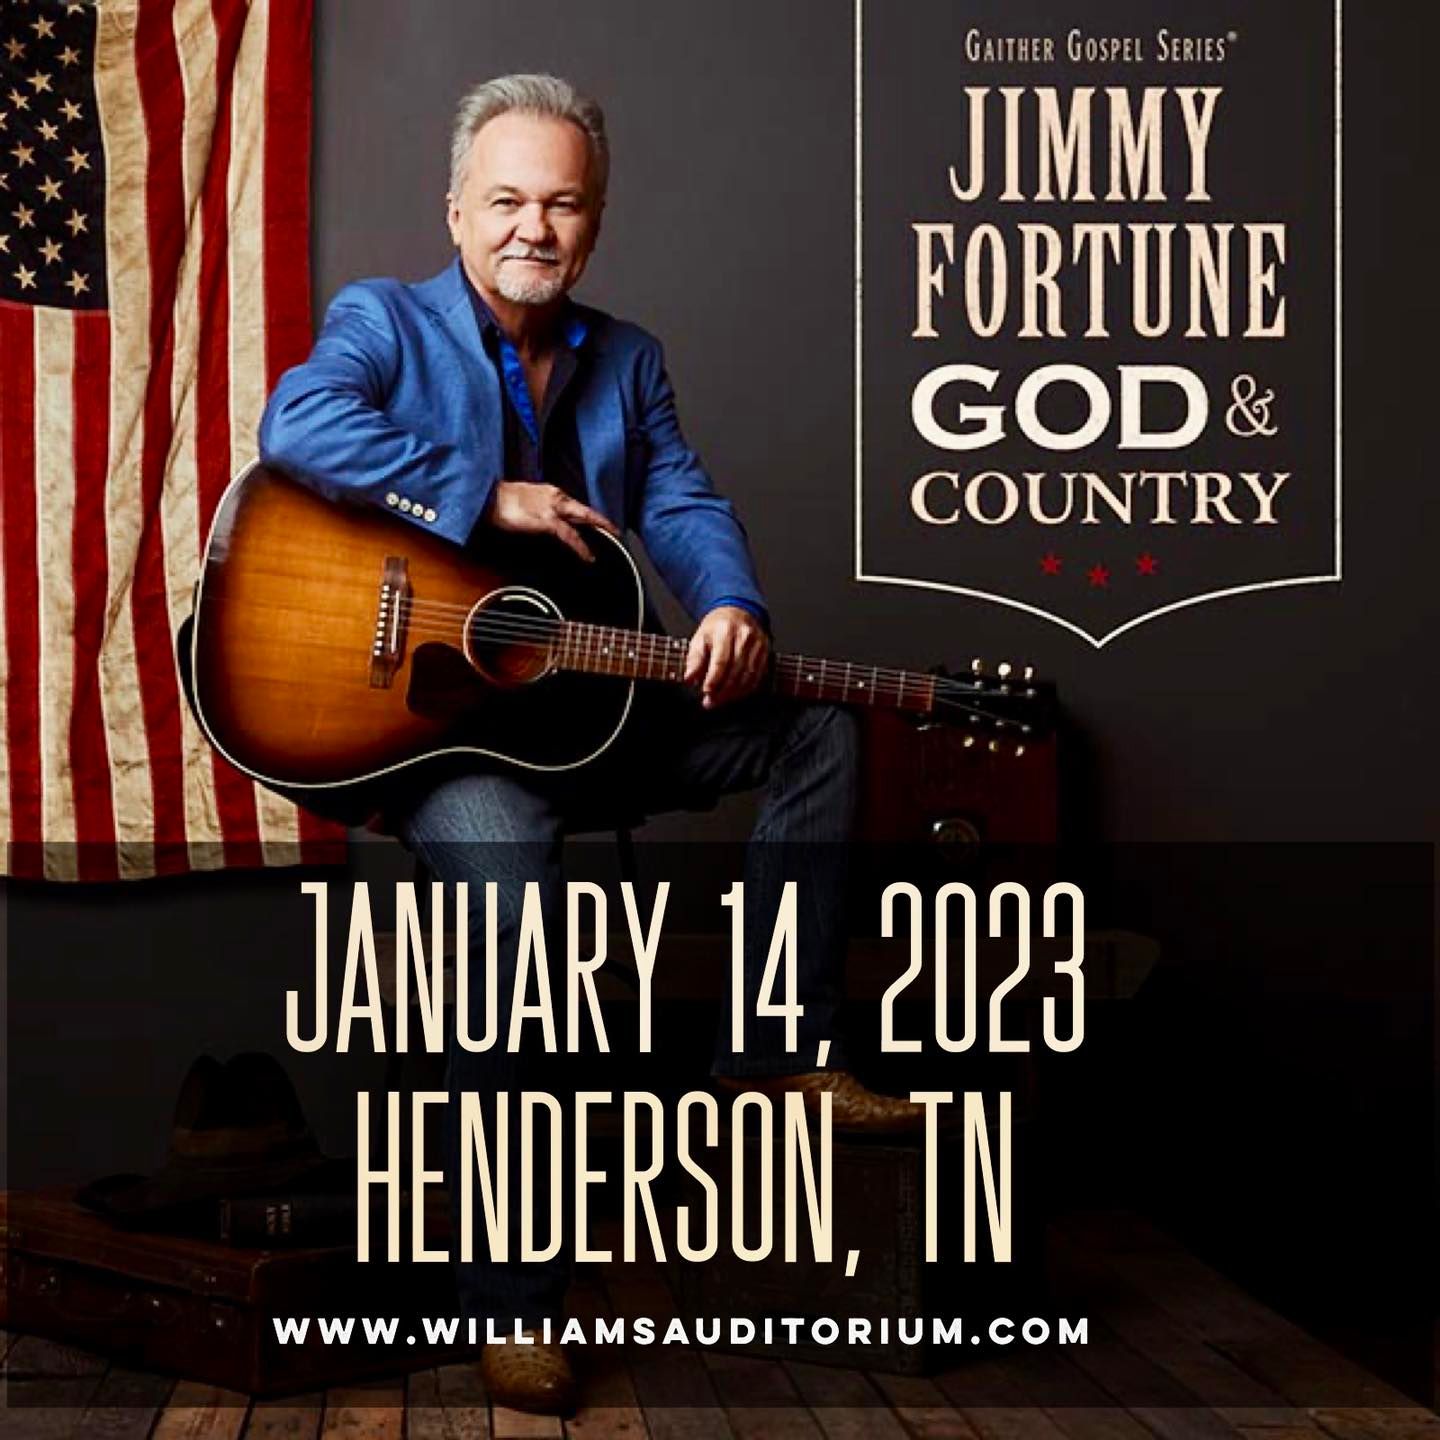 Buy Tickets to Jimmy Fortune in Henderson on Jan 14, 2023